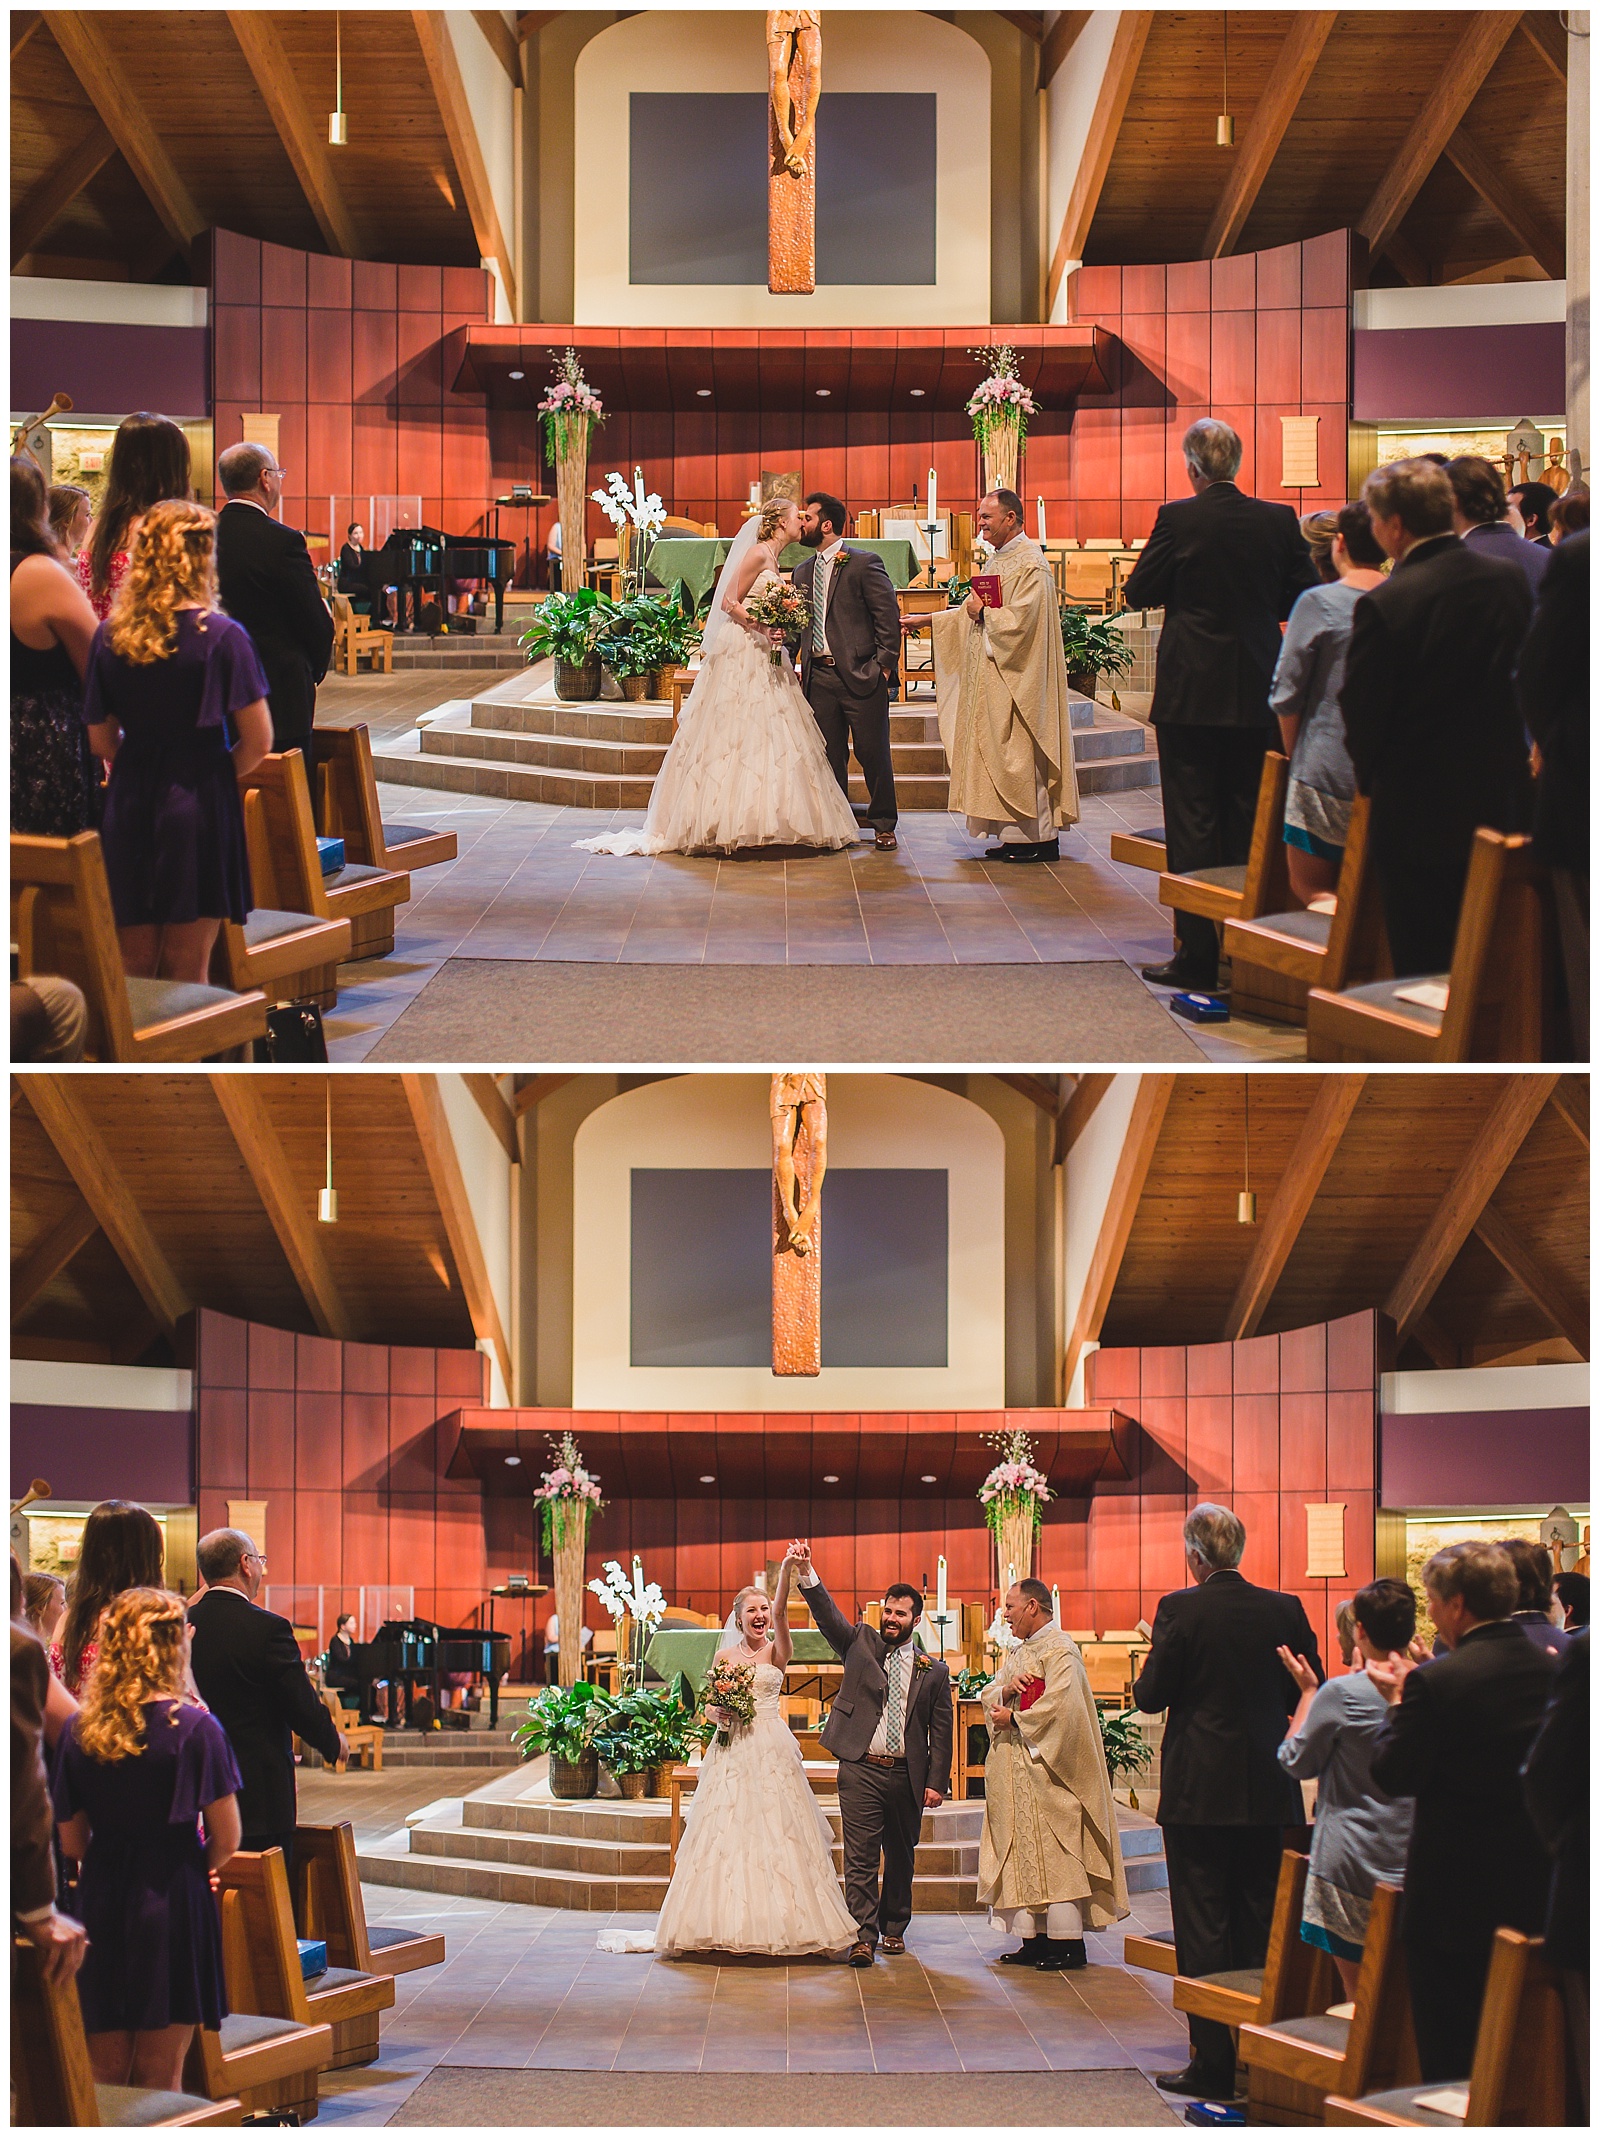 Wedding photography at Good Shepherd Catholic Church in Shawnee, Kansas.